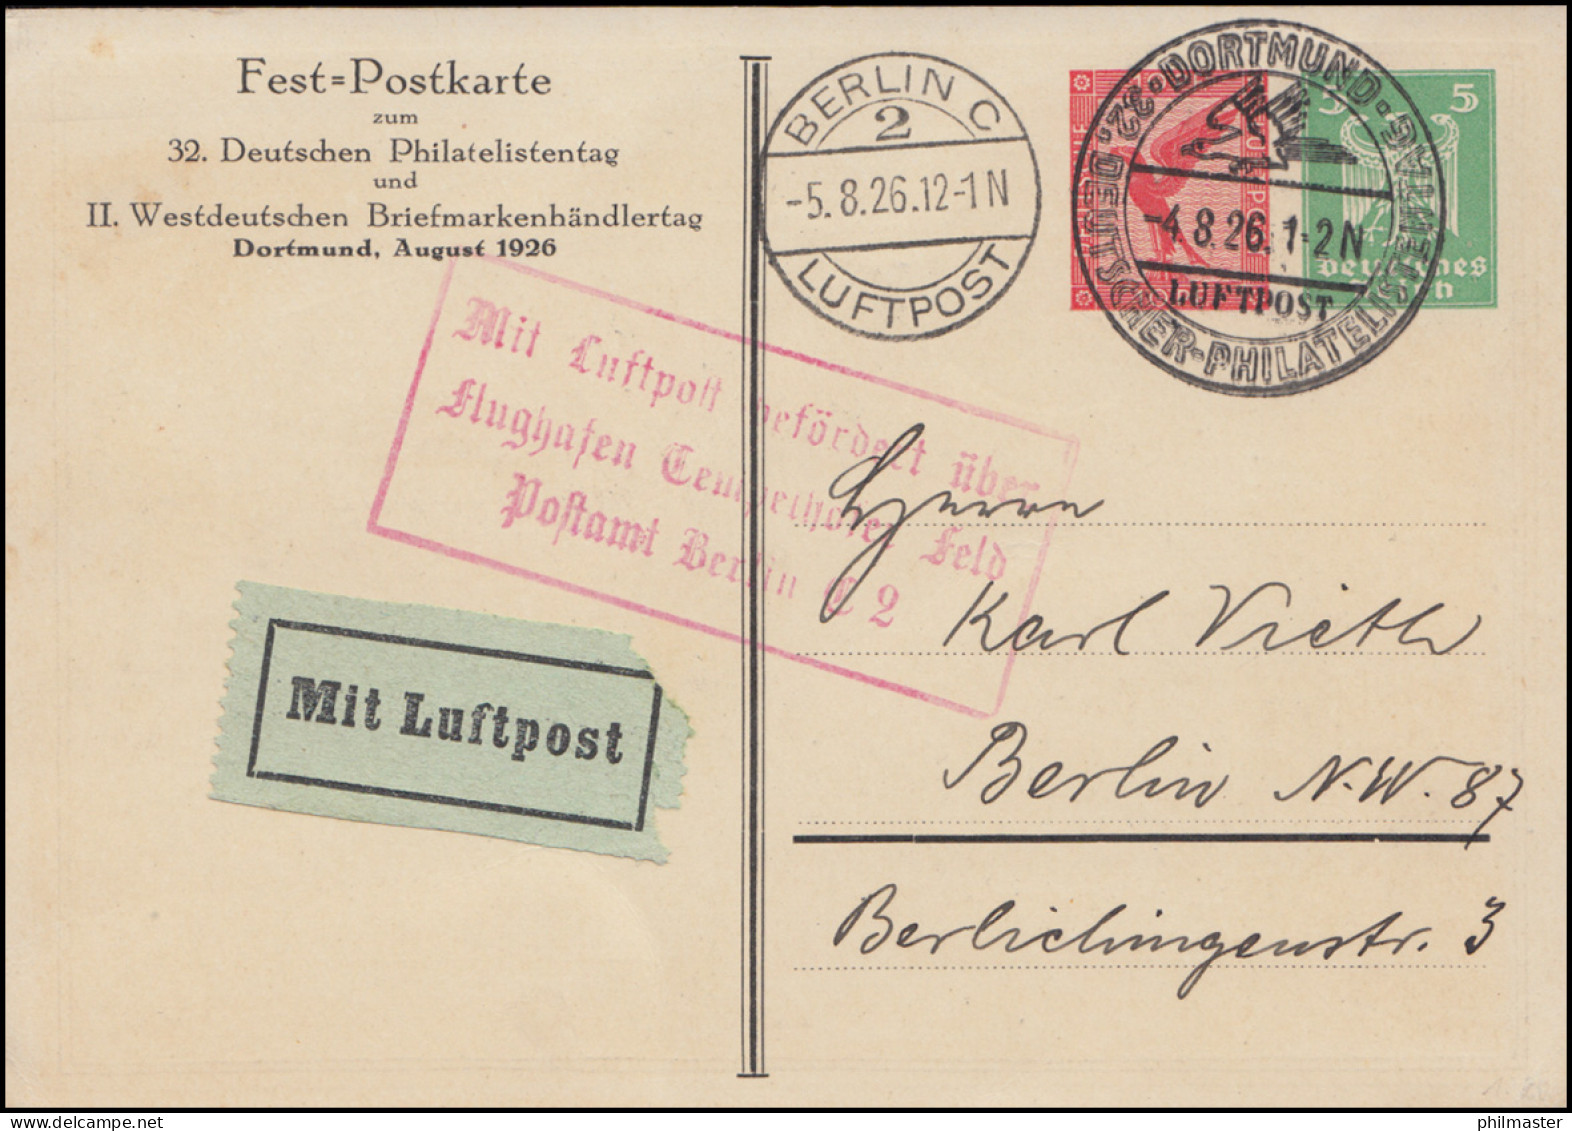 Mit Luftpost Befördert über Tempelhofer Feld Postamt Berlin SSt Dortmund 4.8.26 - Esposizioni Filateliche